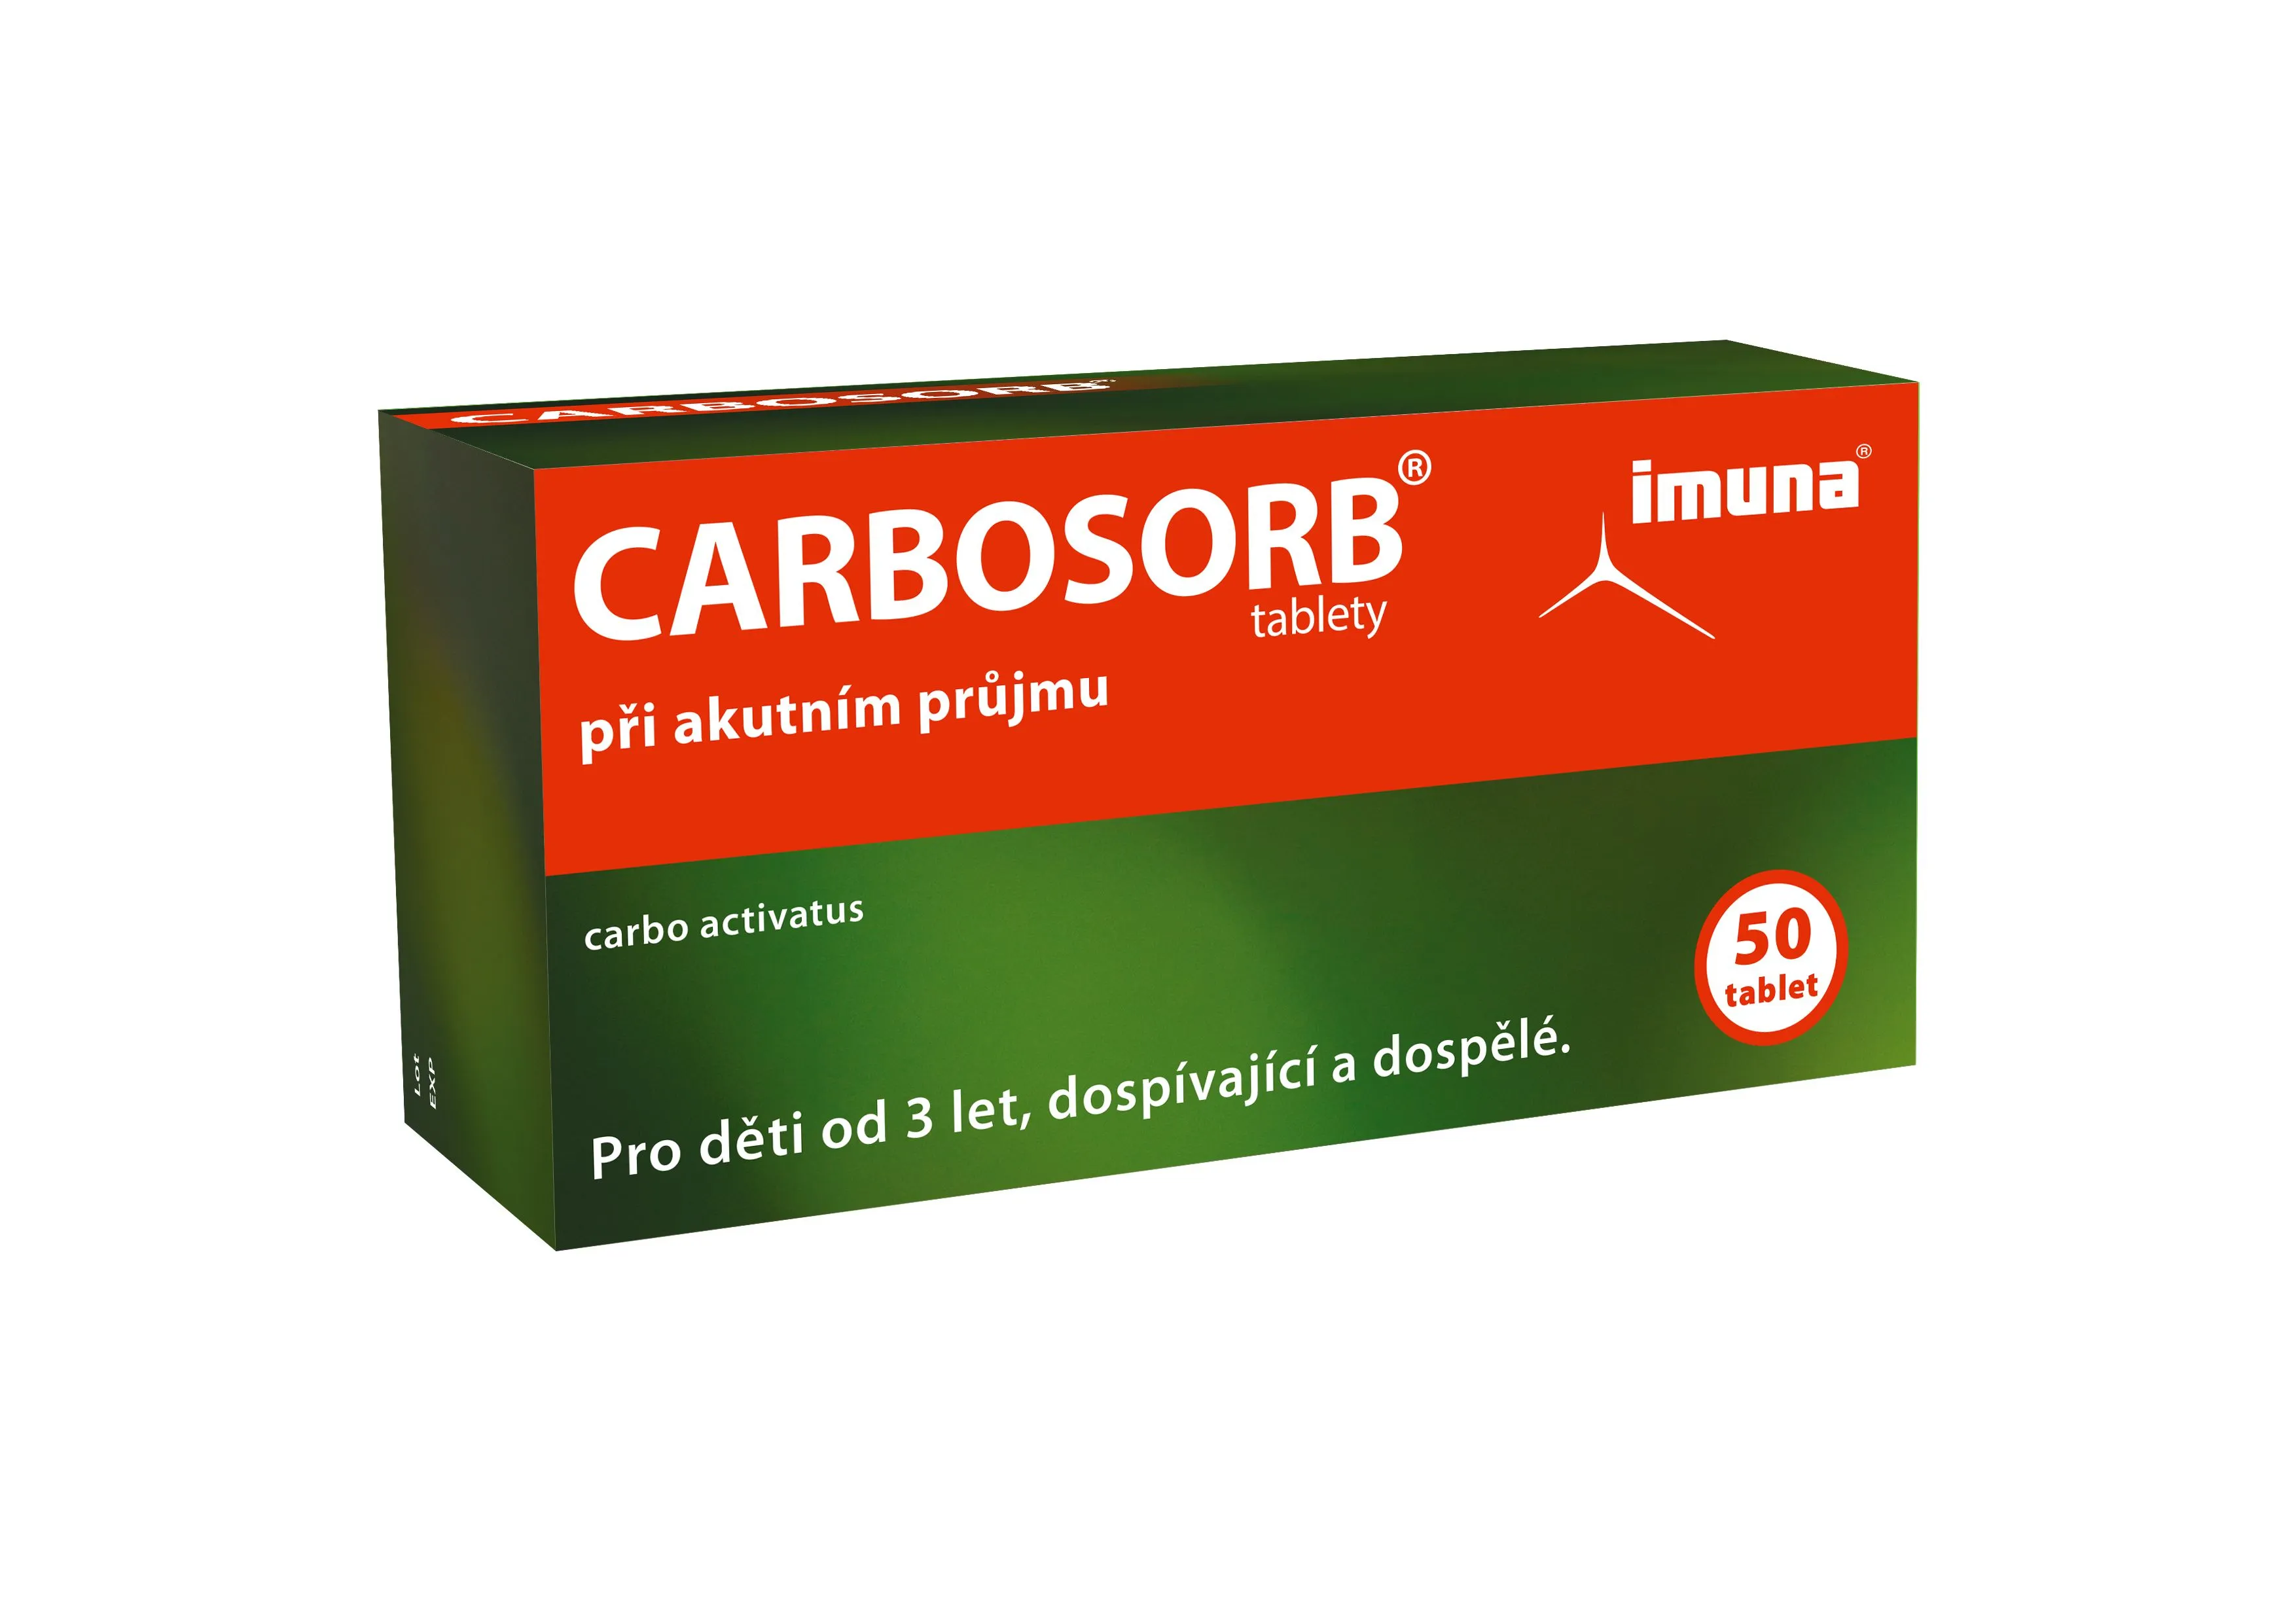 Carbosorb 50 tablet